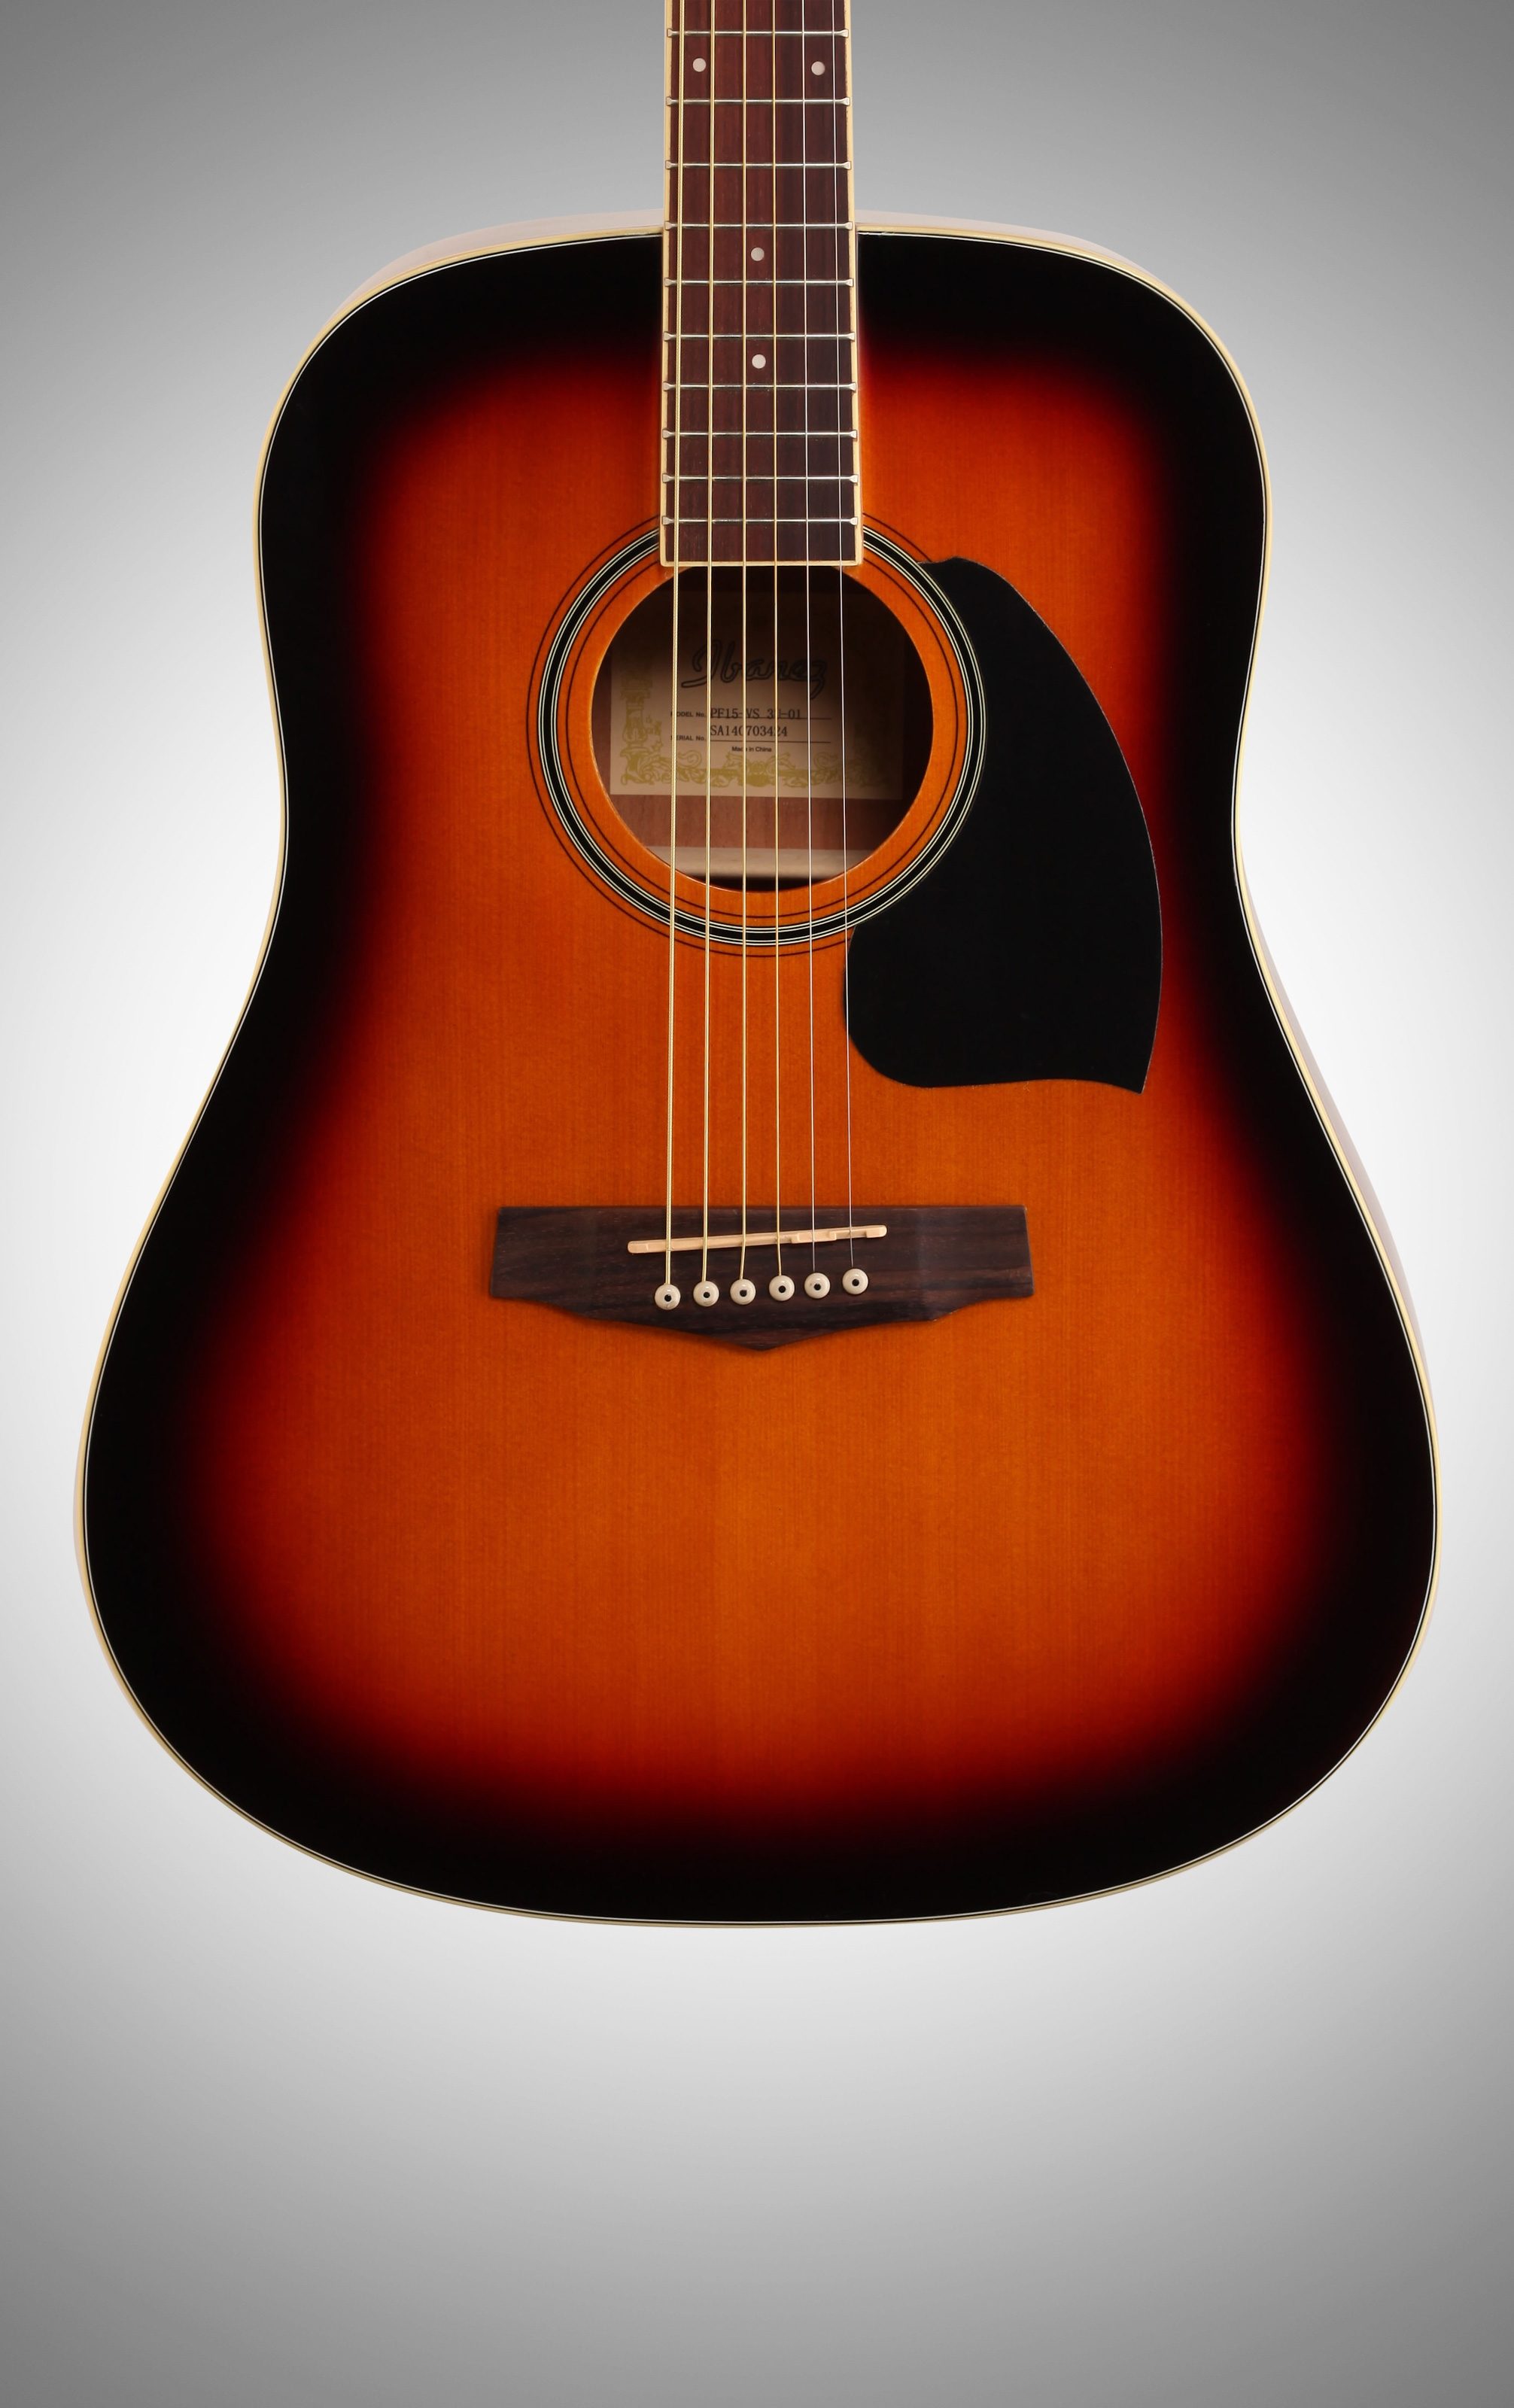 Ibanez PF15 Acoustic Guitar